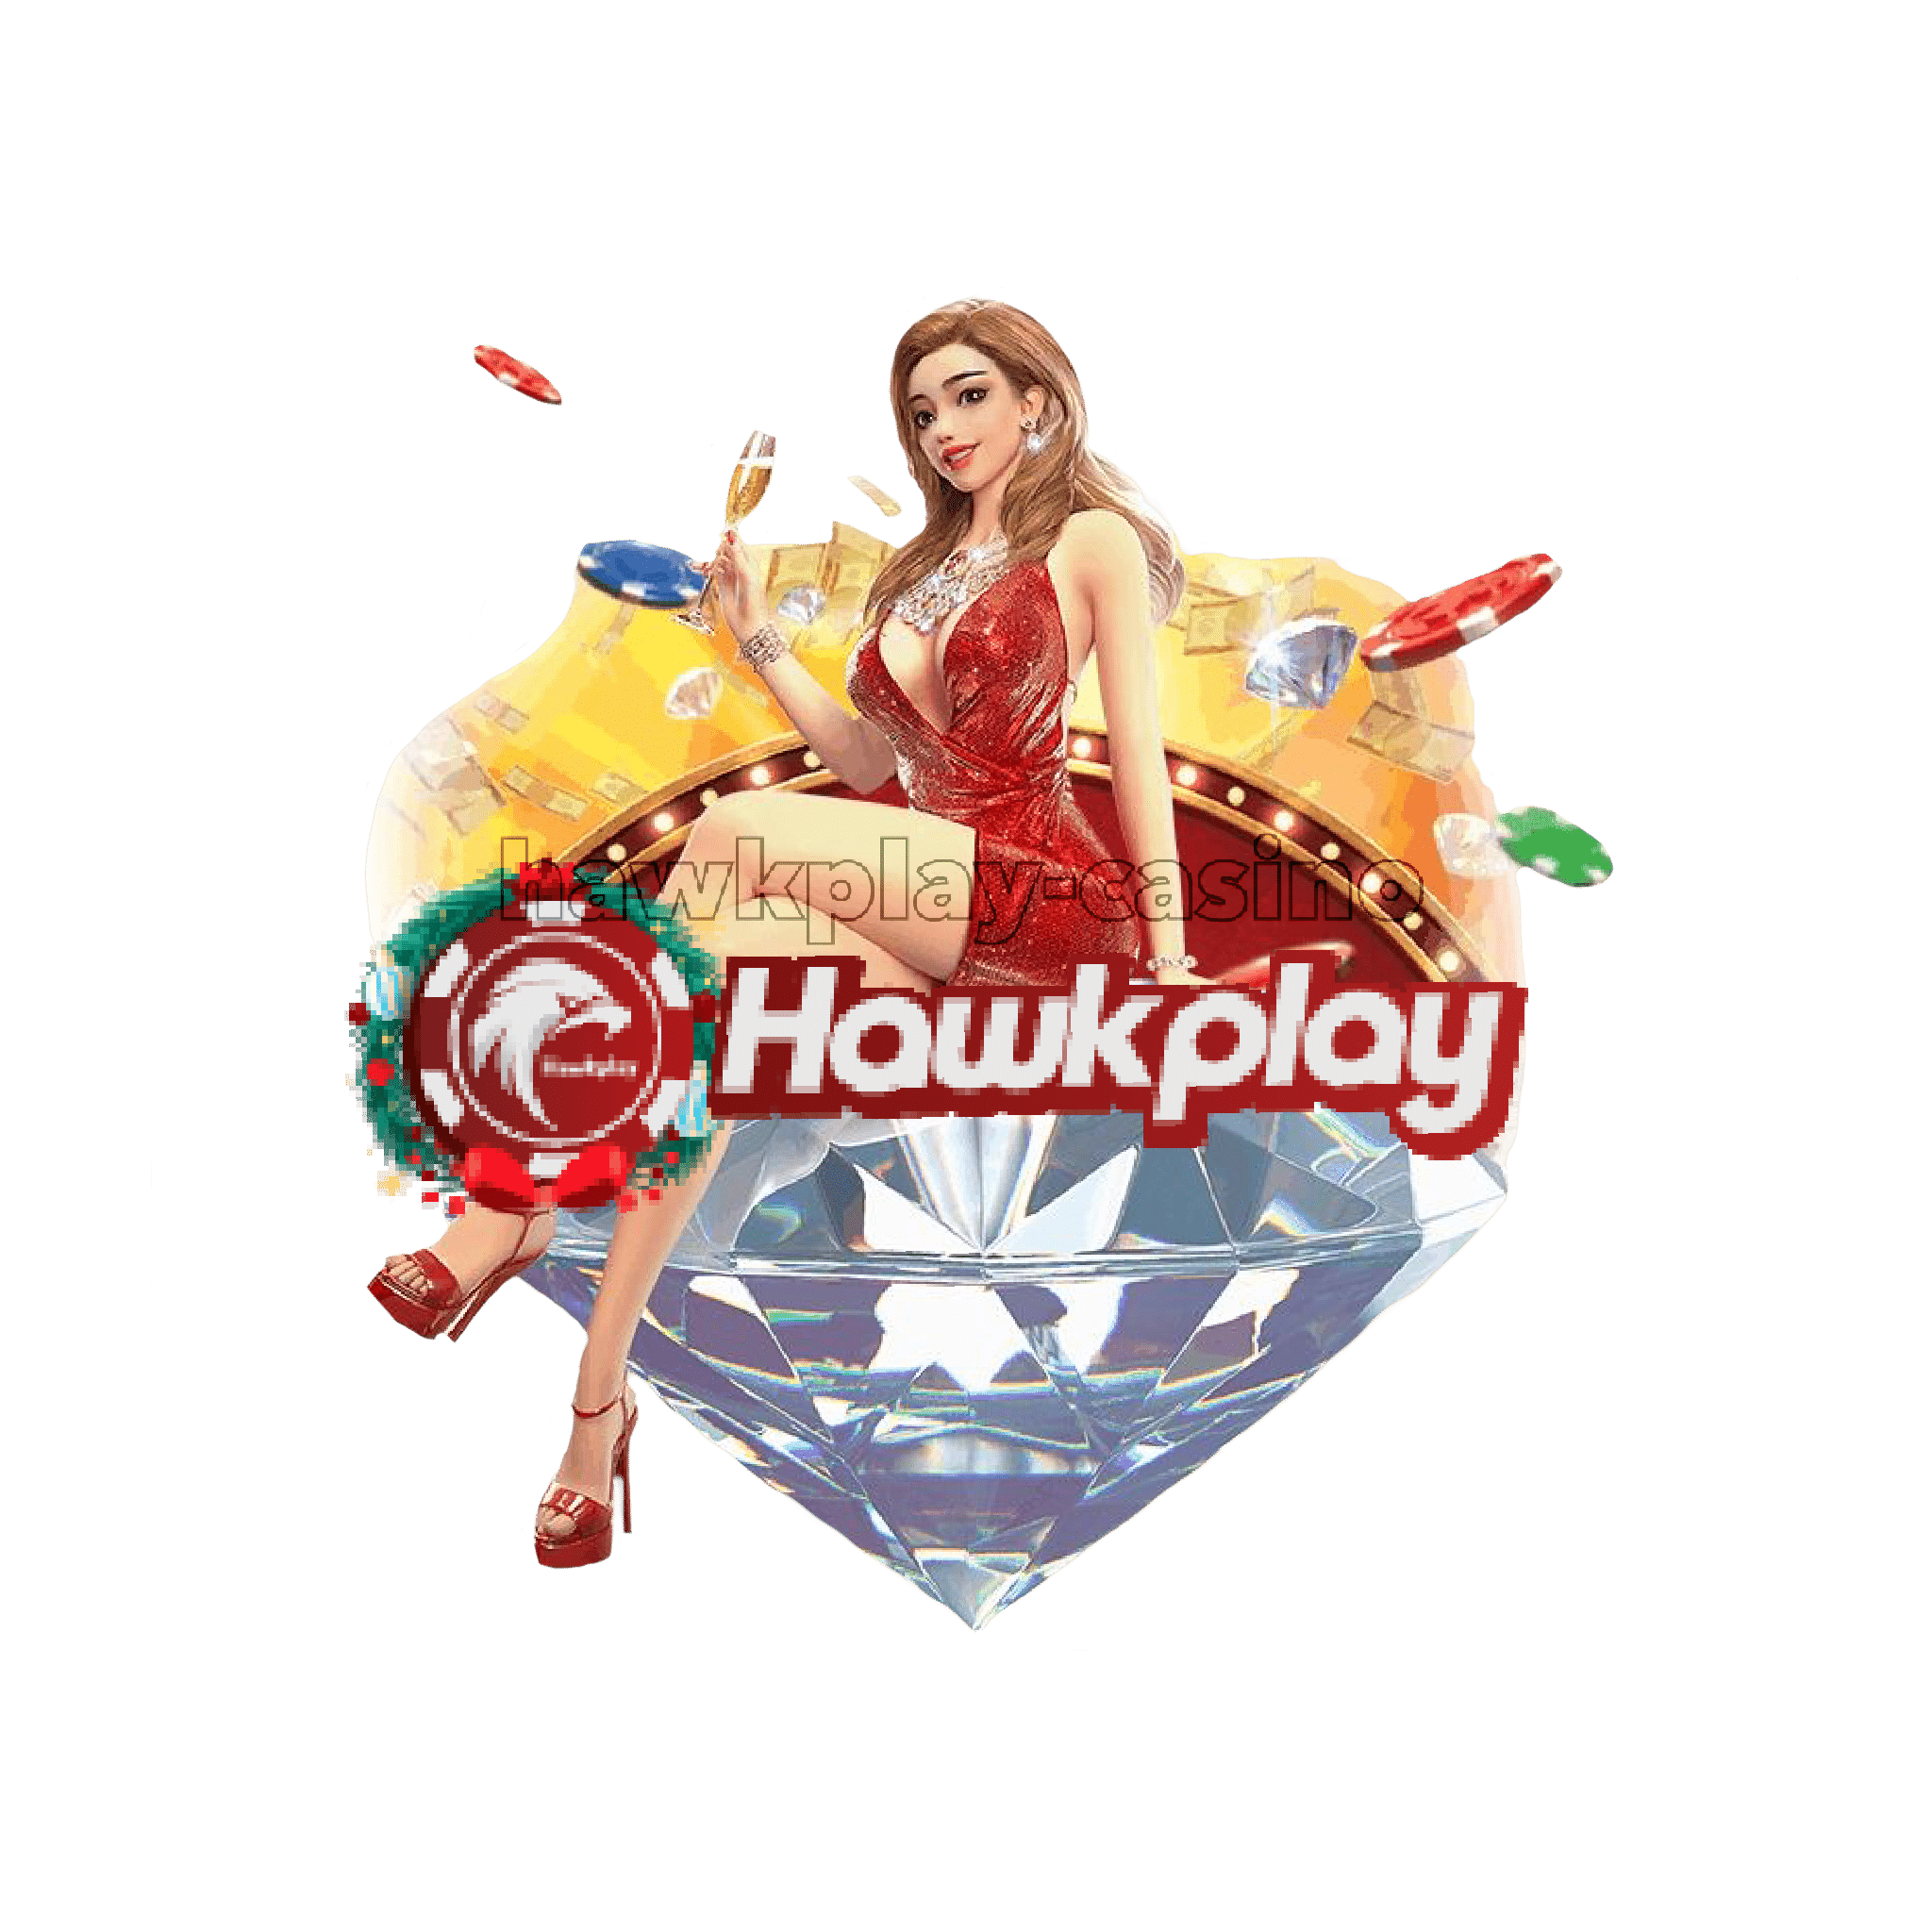 Hawkplay online casino promotions